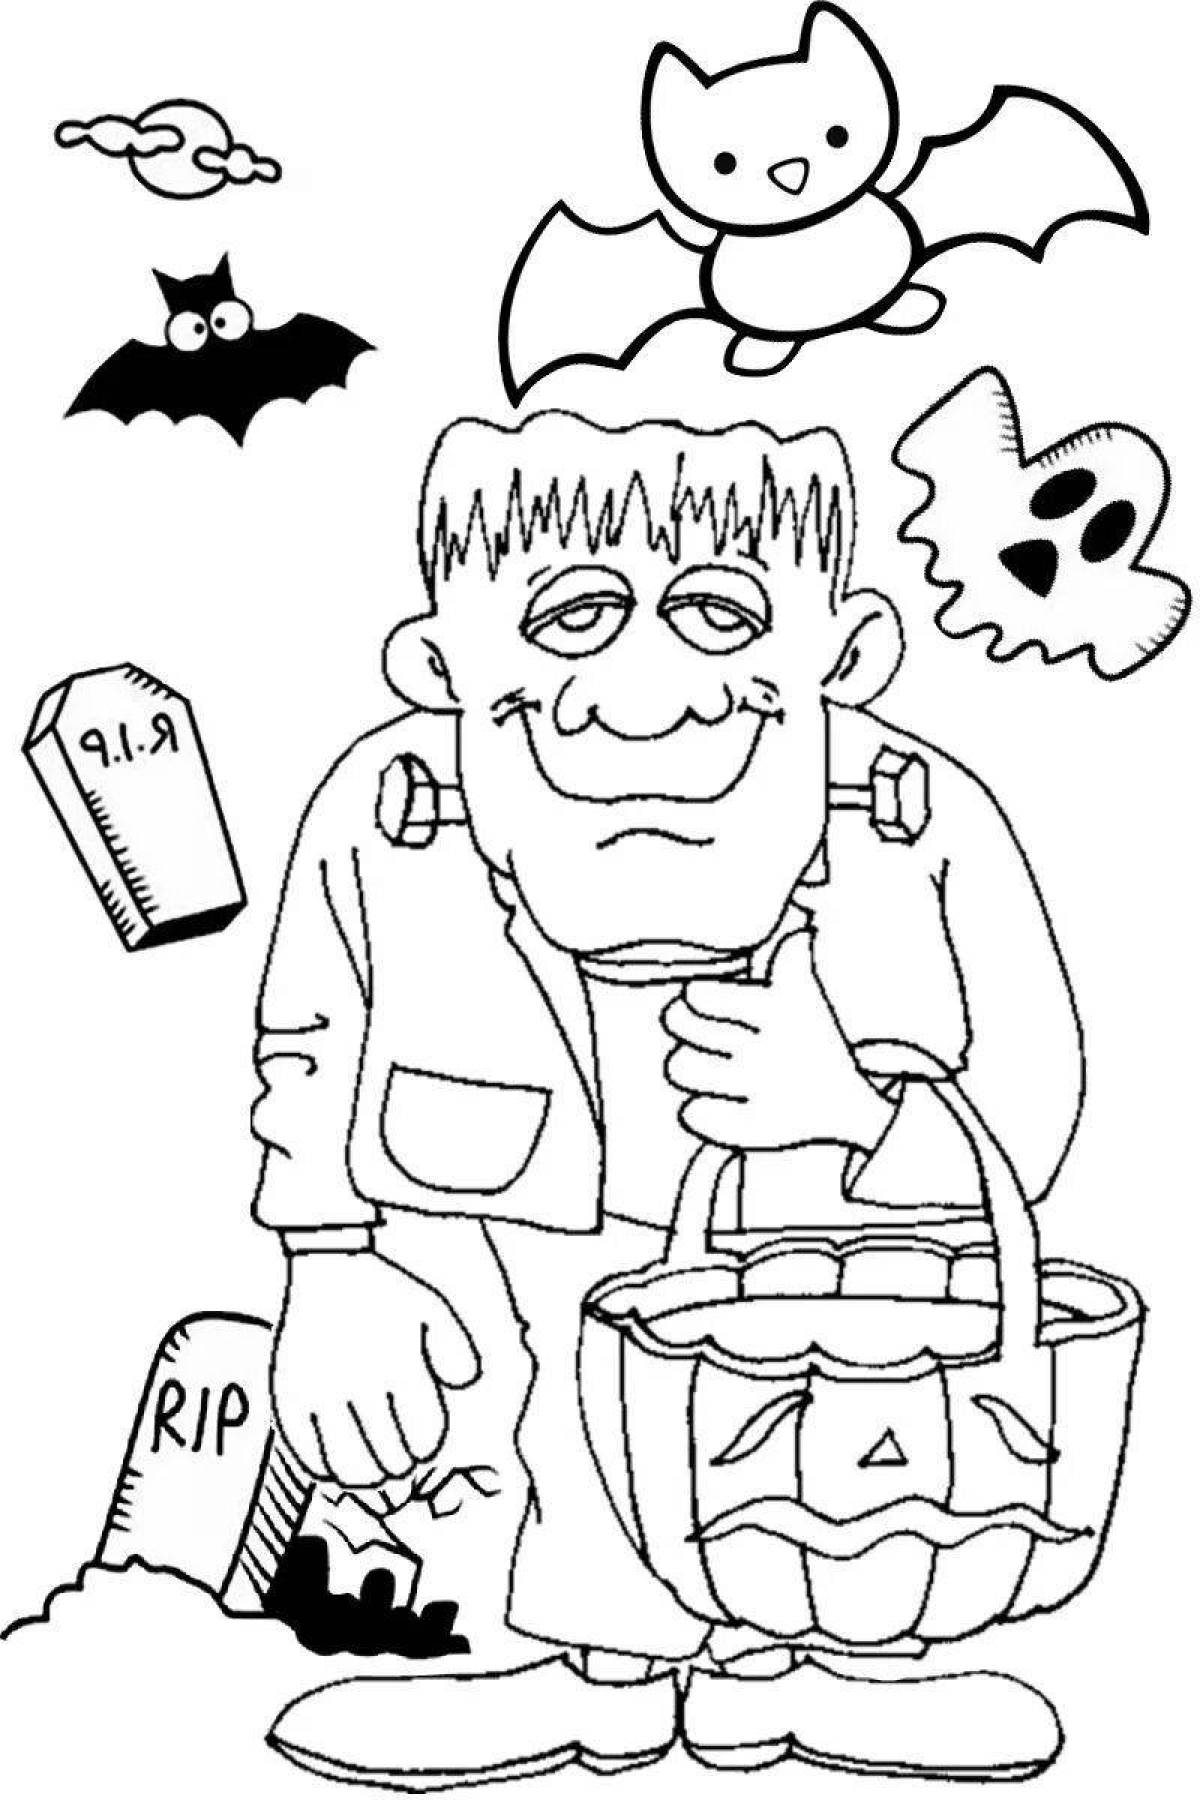 Disturbing Frankenstein coloring page